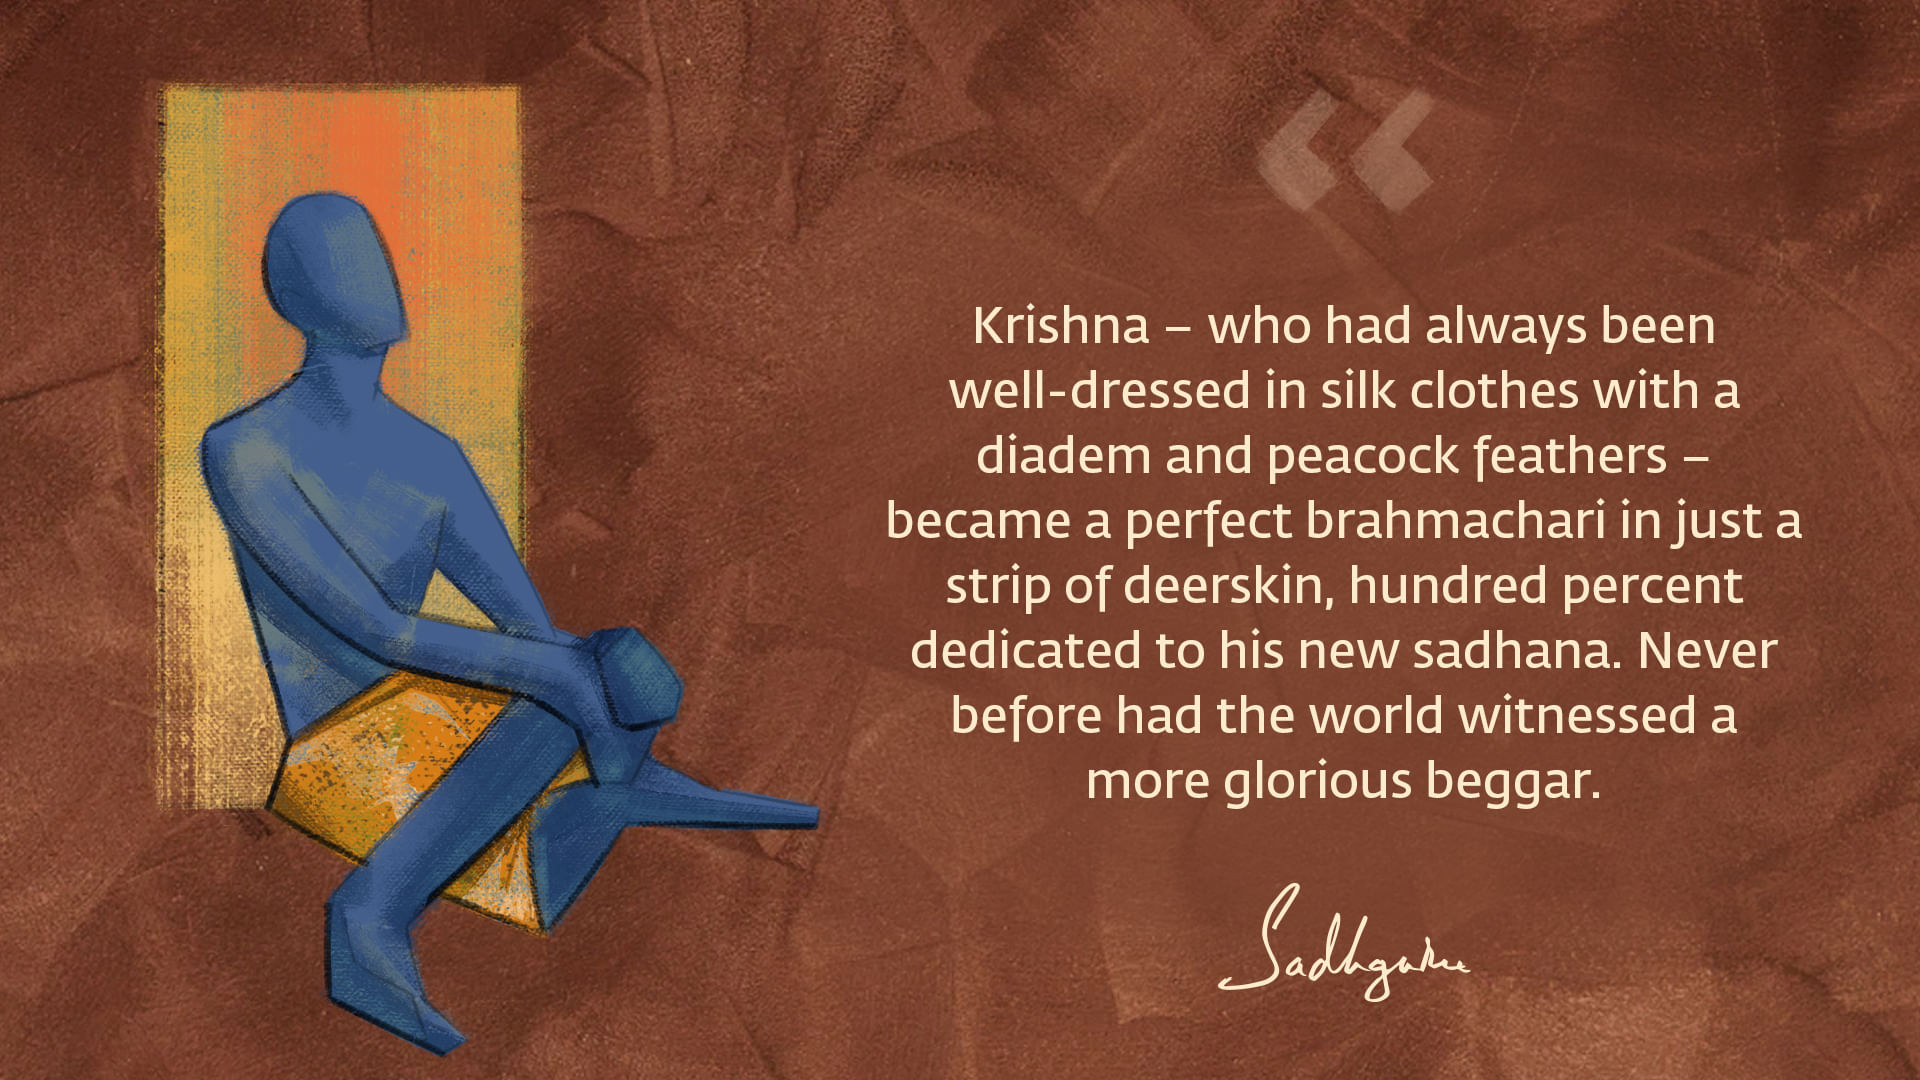 Krishna quote from Sadhguru with abstract Krishna as a brahmachari.